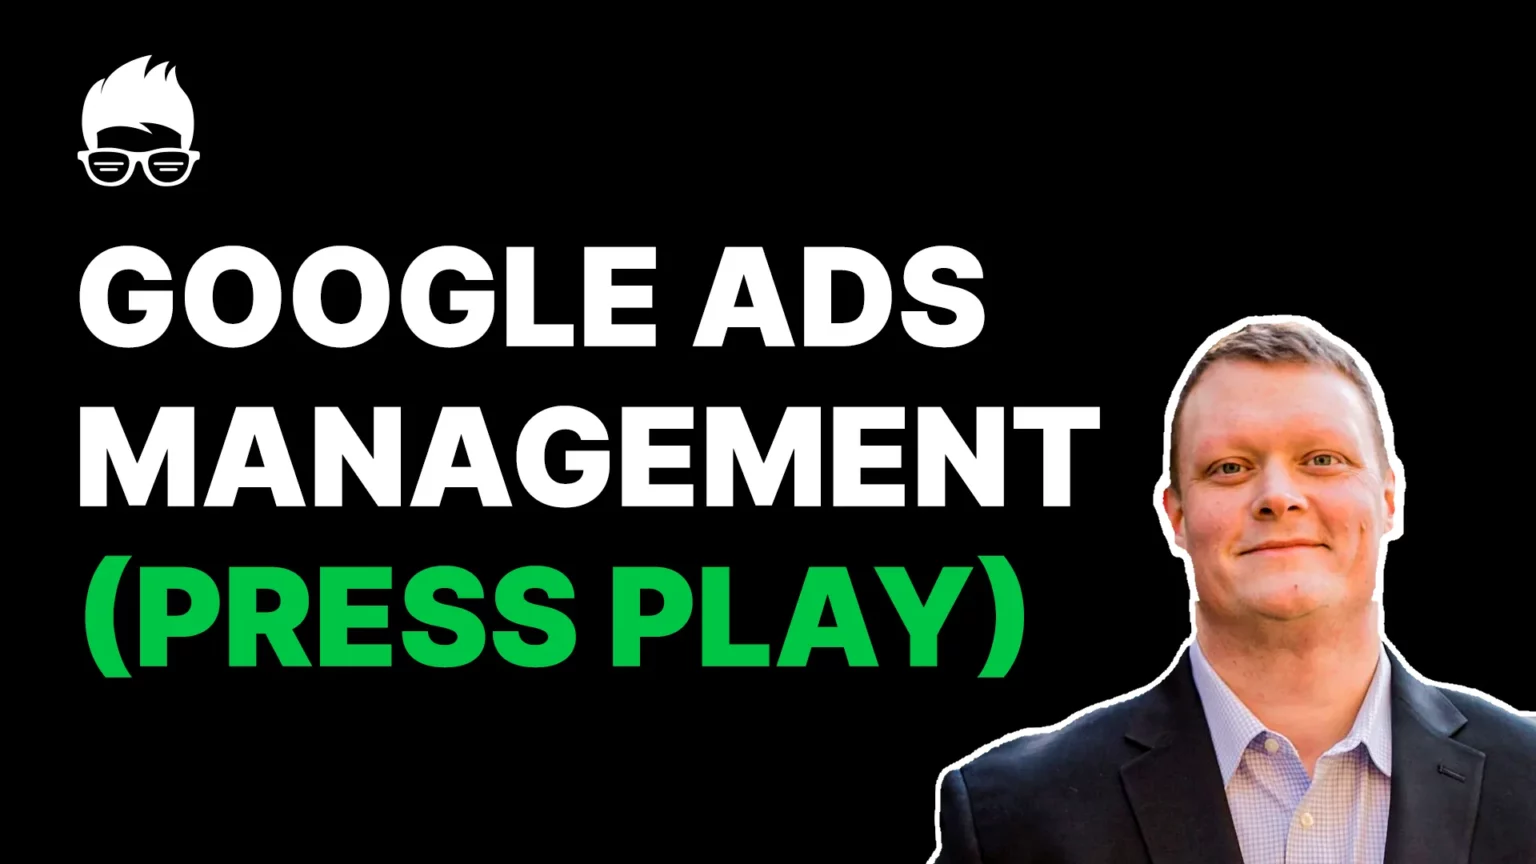 Google Ads Agency Video Intro